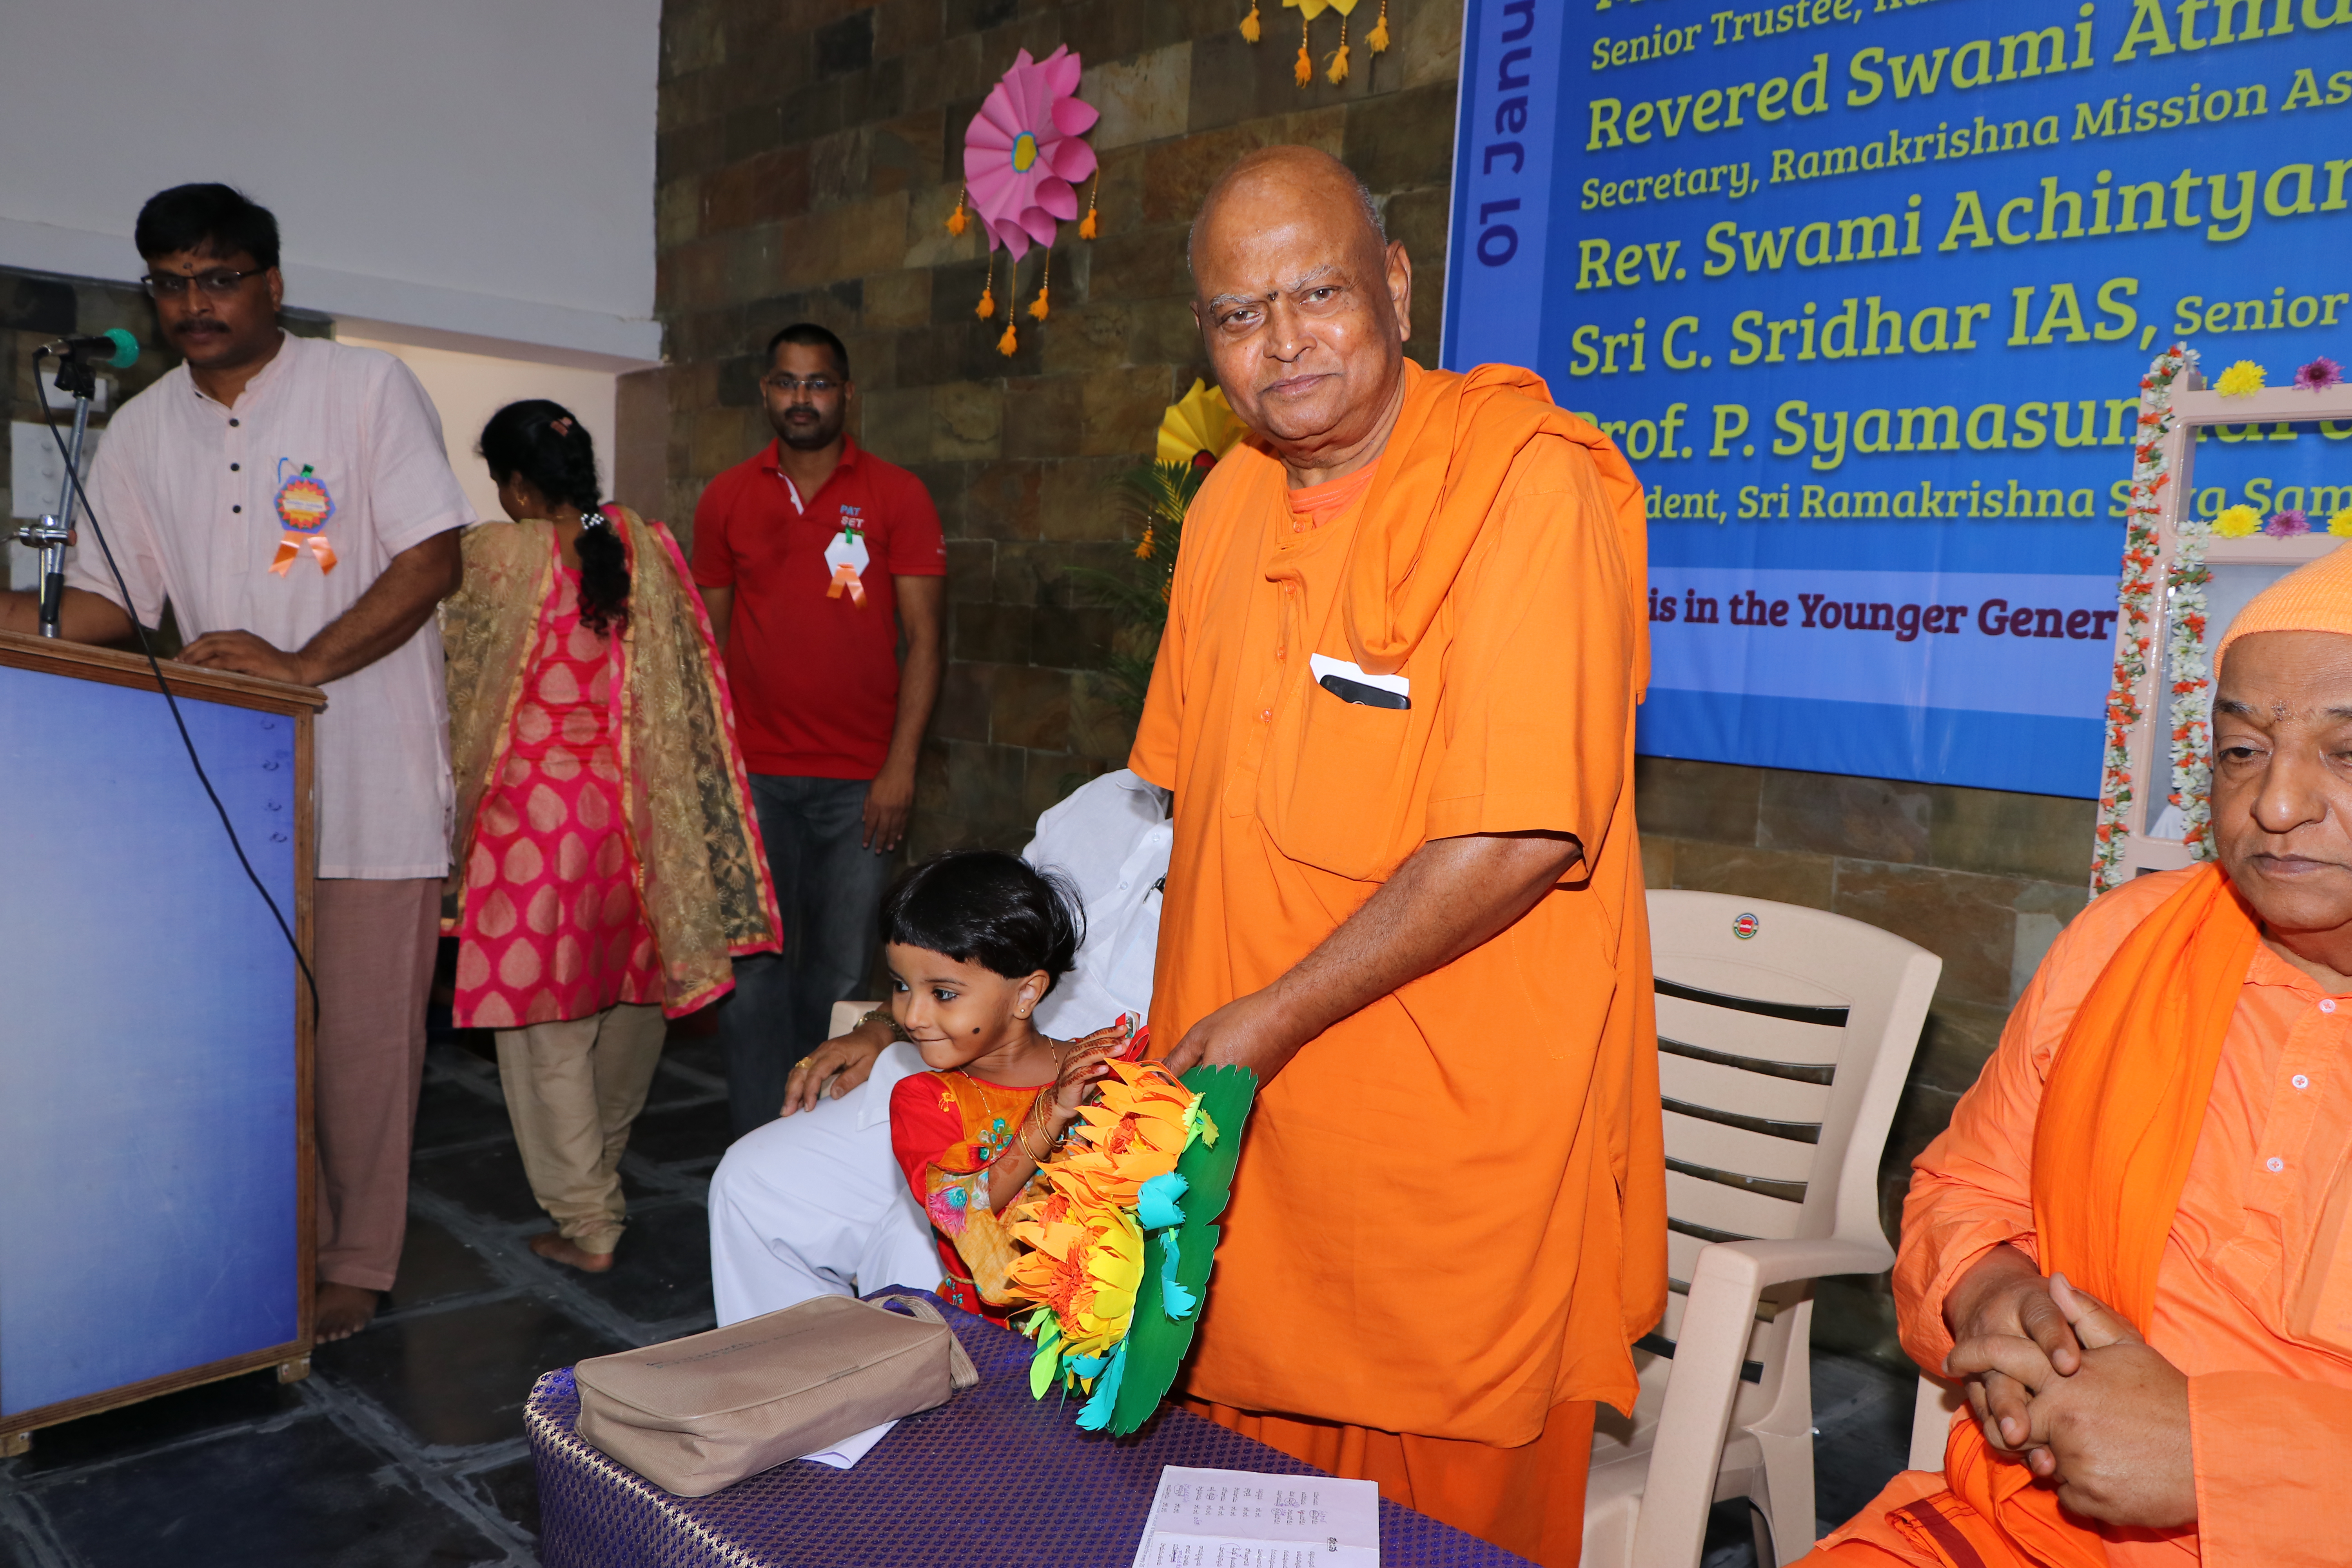 Rev. Swami Atmavidanandaji Maharaj